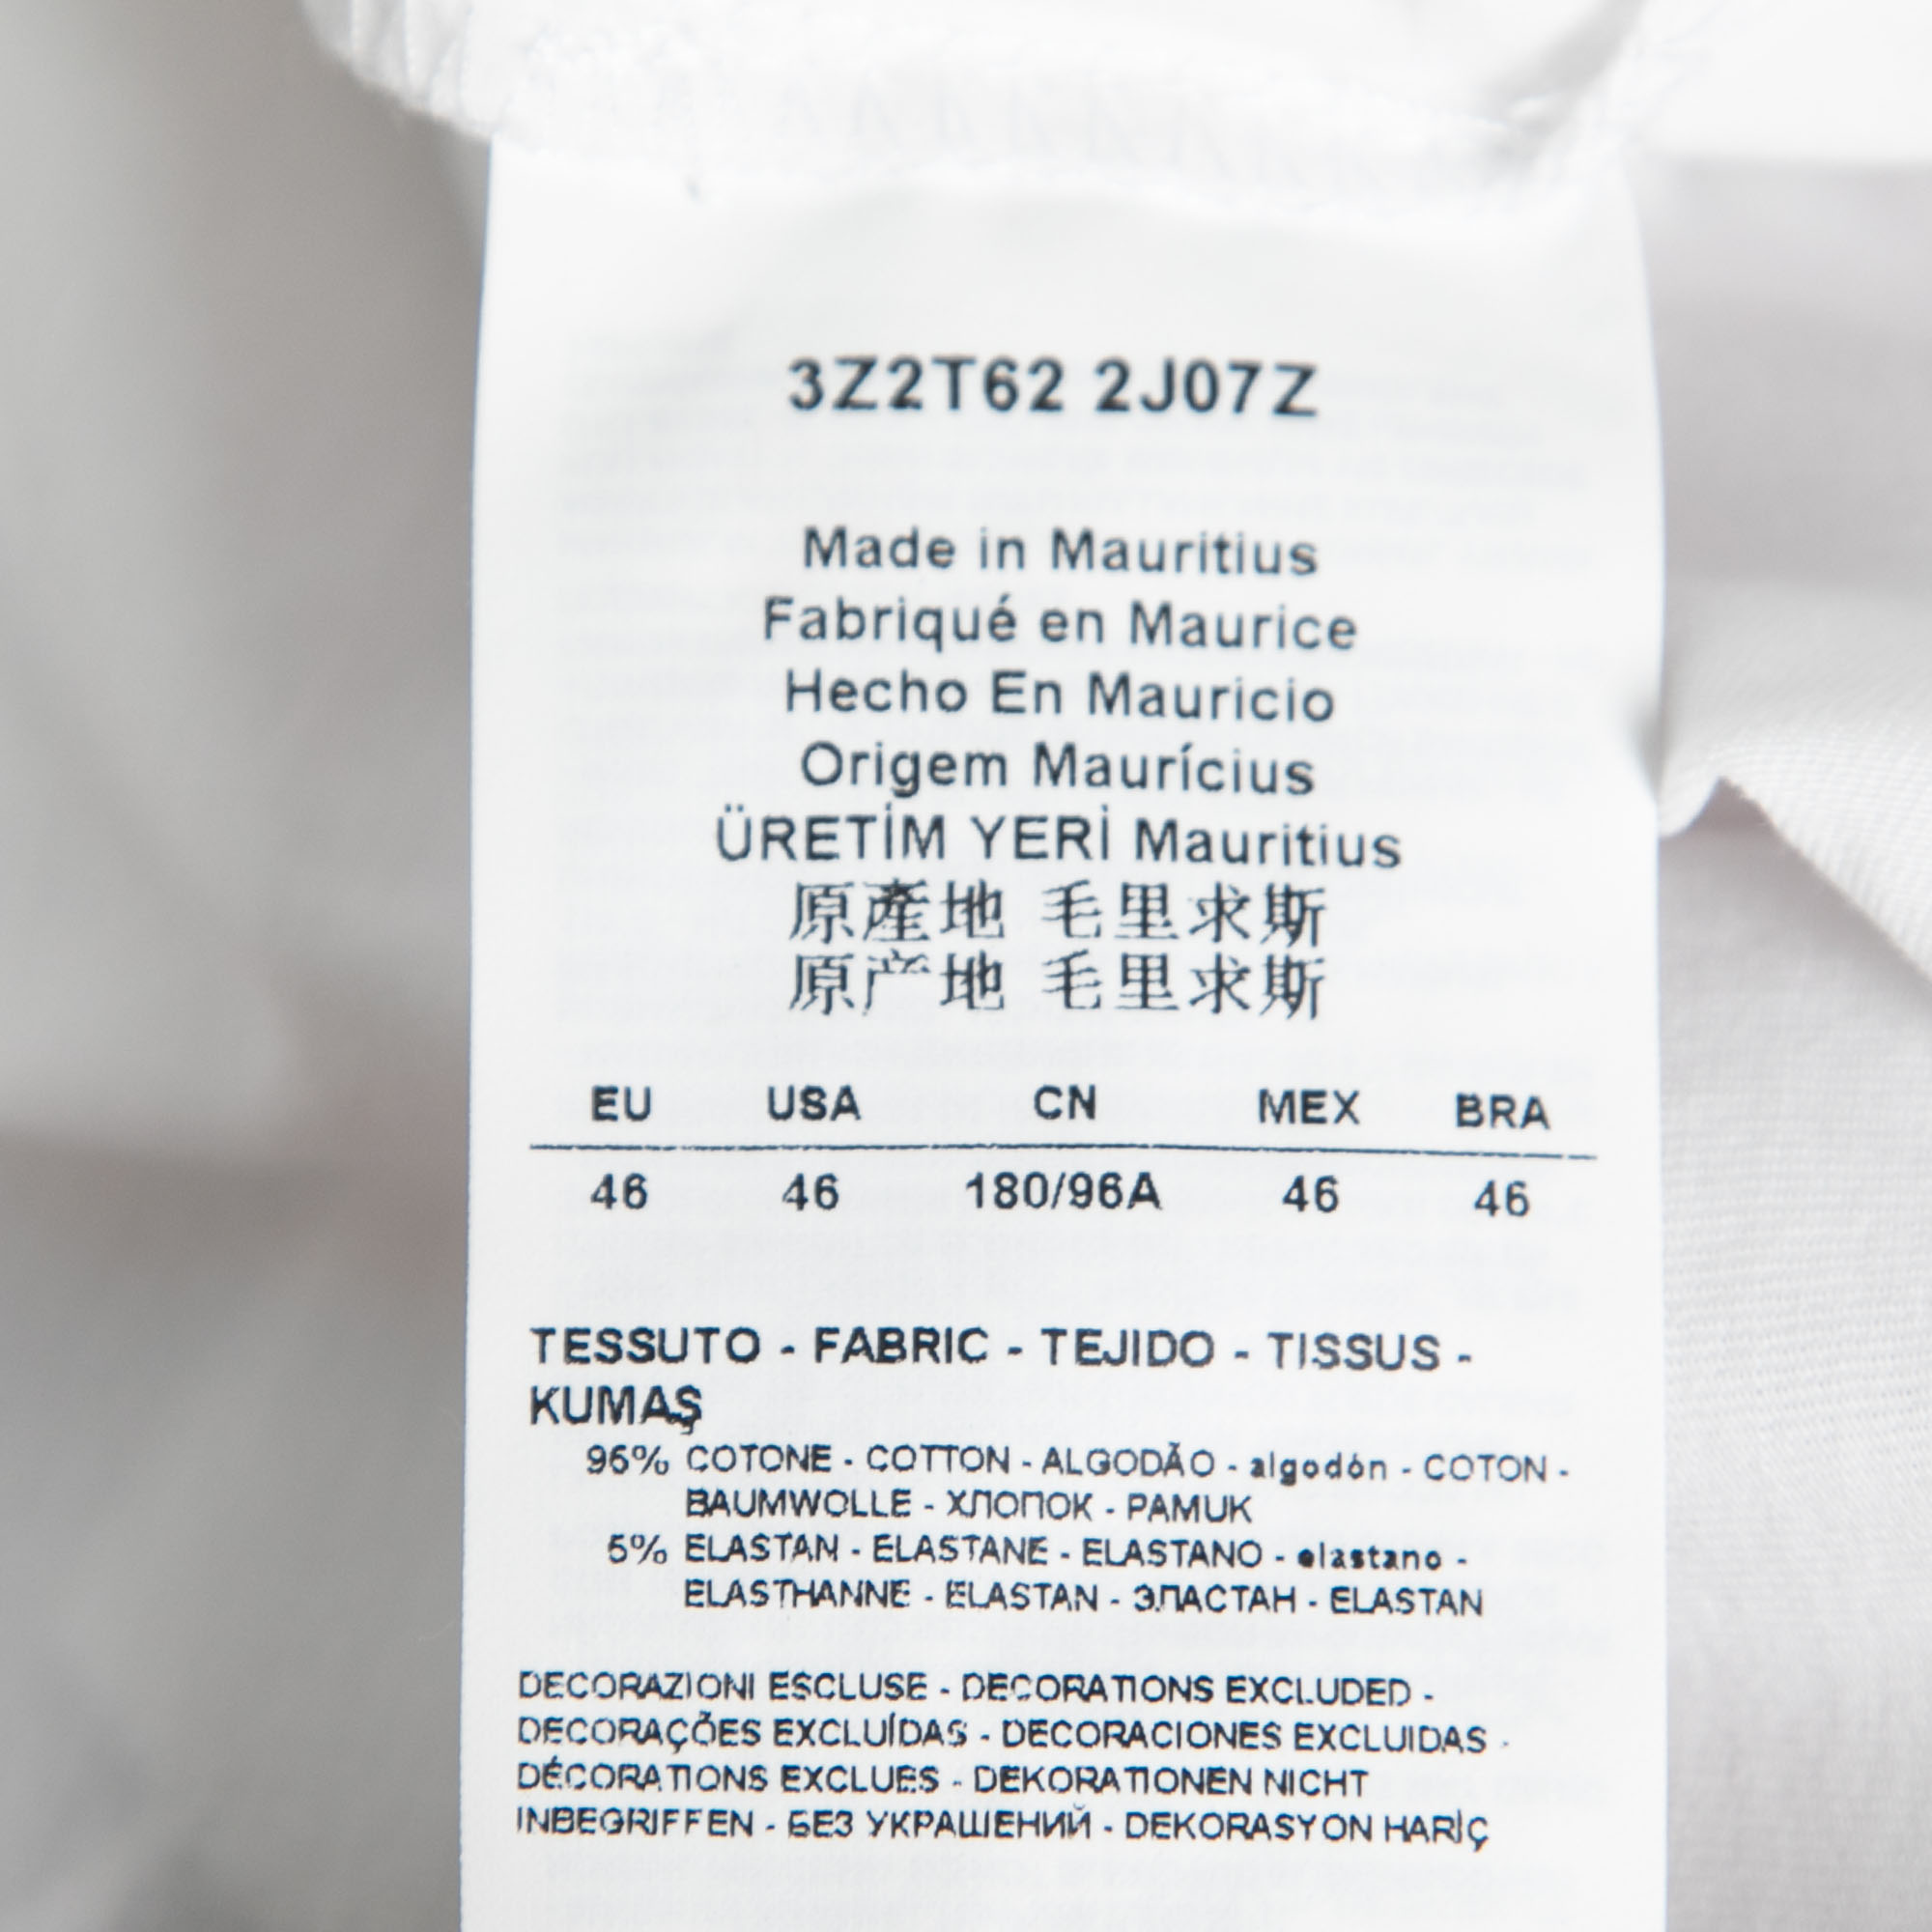 Emporio Armani White Printed Cotton Short Sleeve T-Shirt L